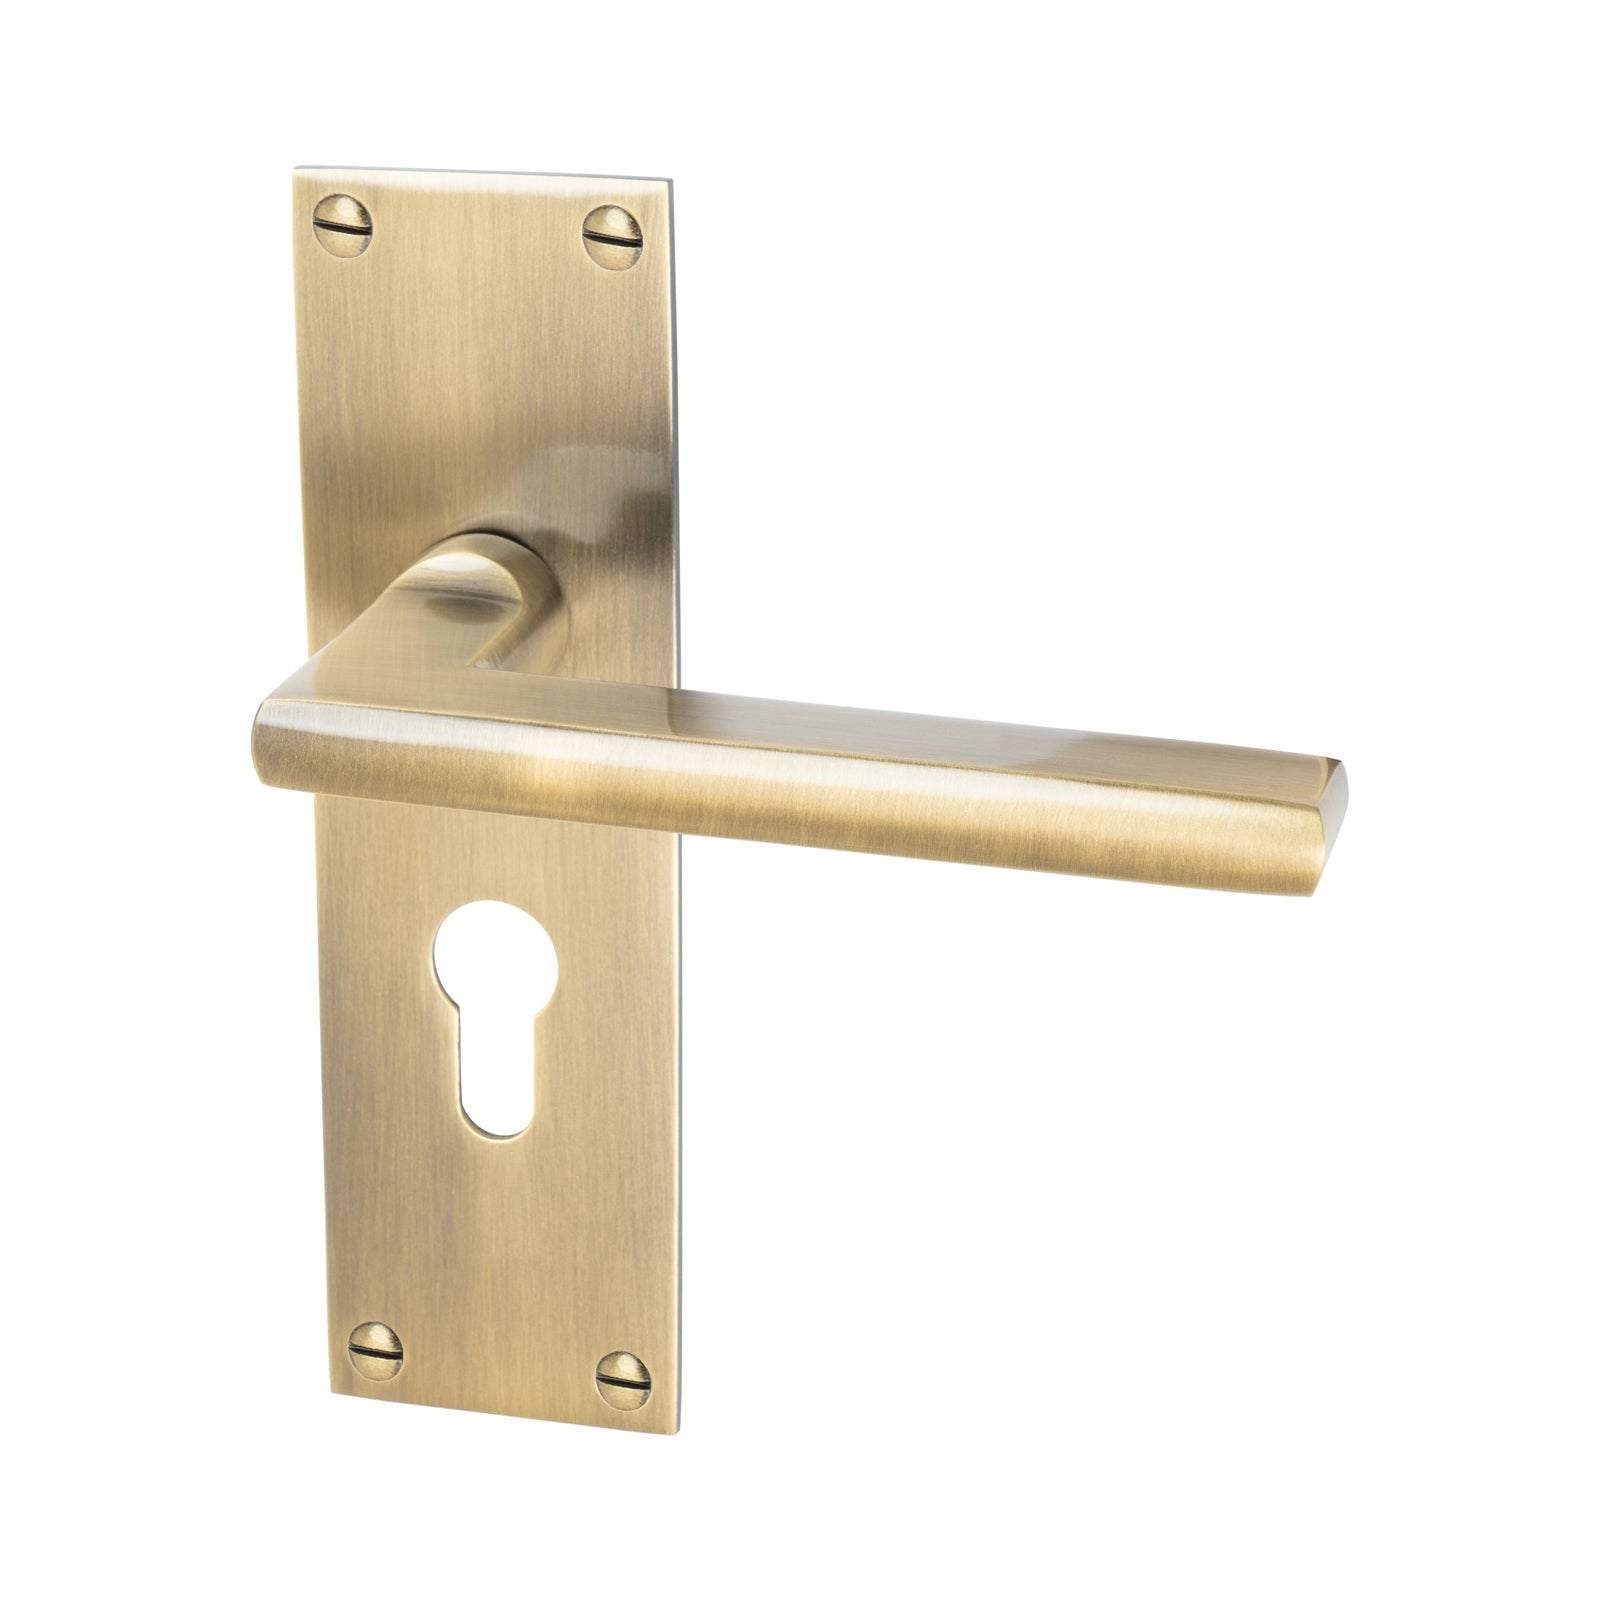 Trident Door Handles On Plate Euro Lock Handle in Aged Brass 